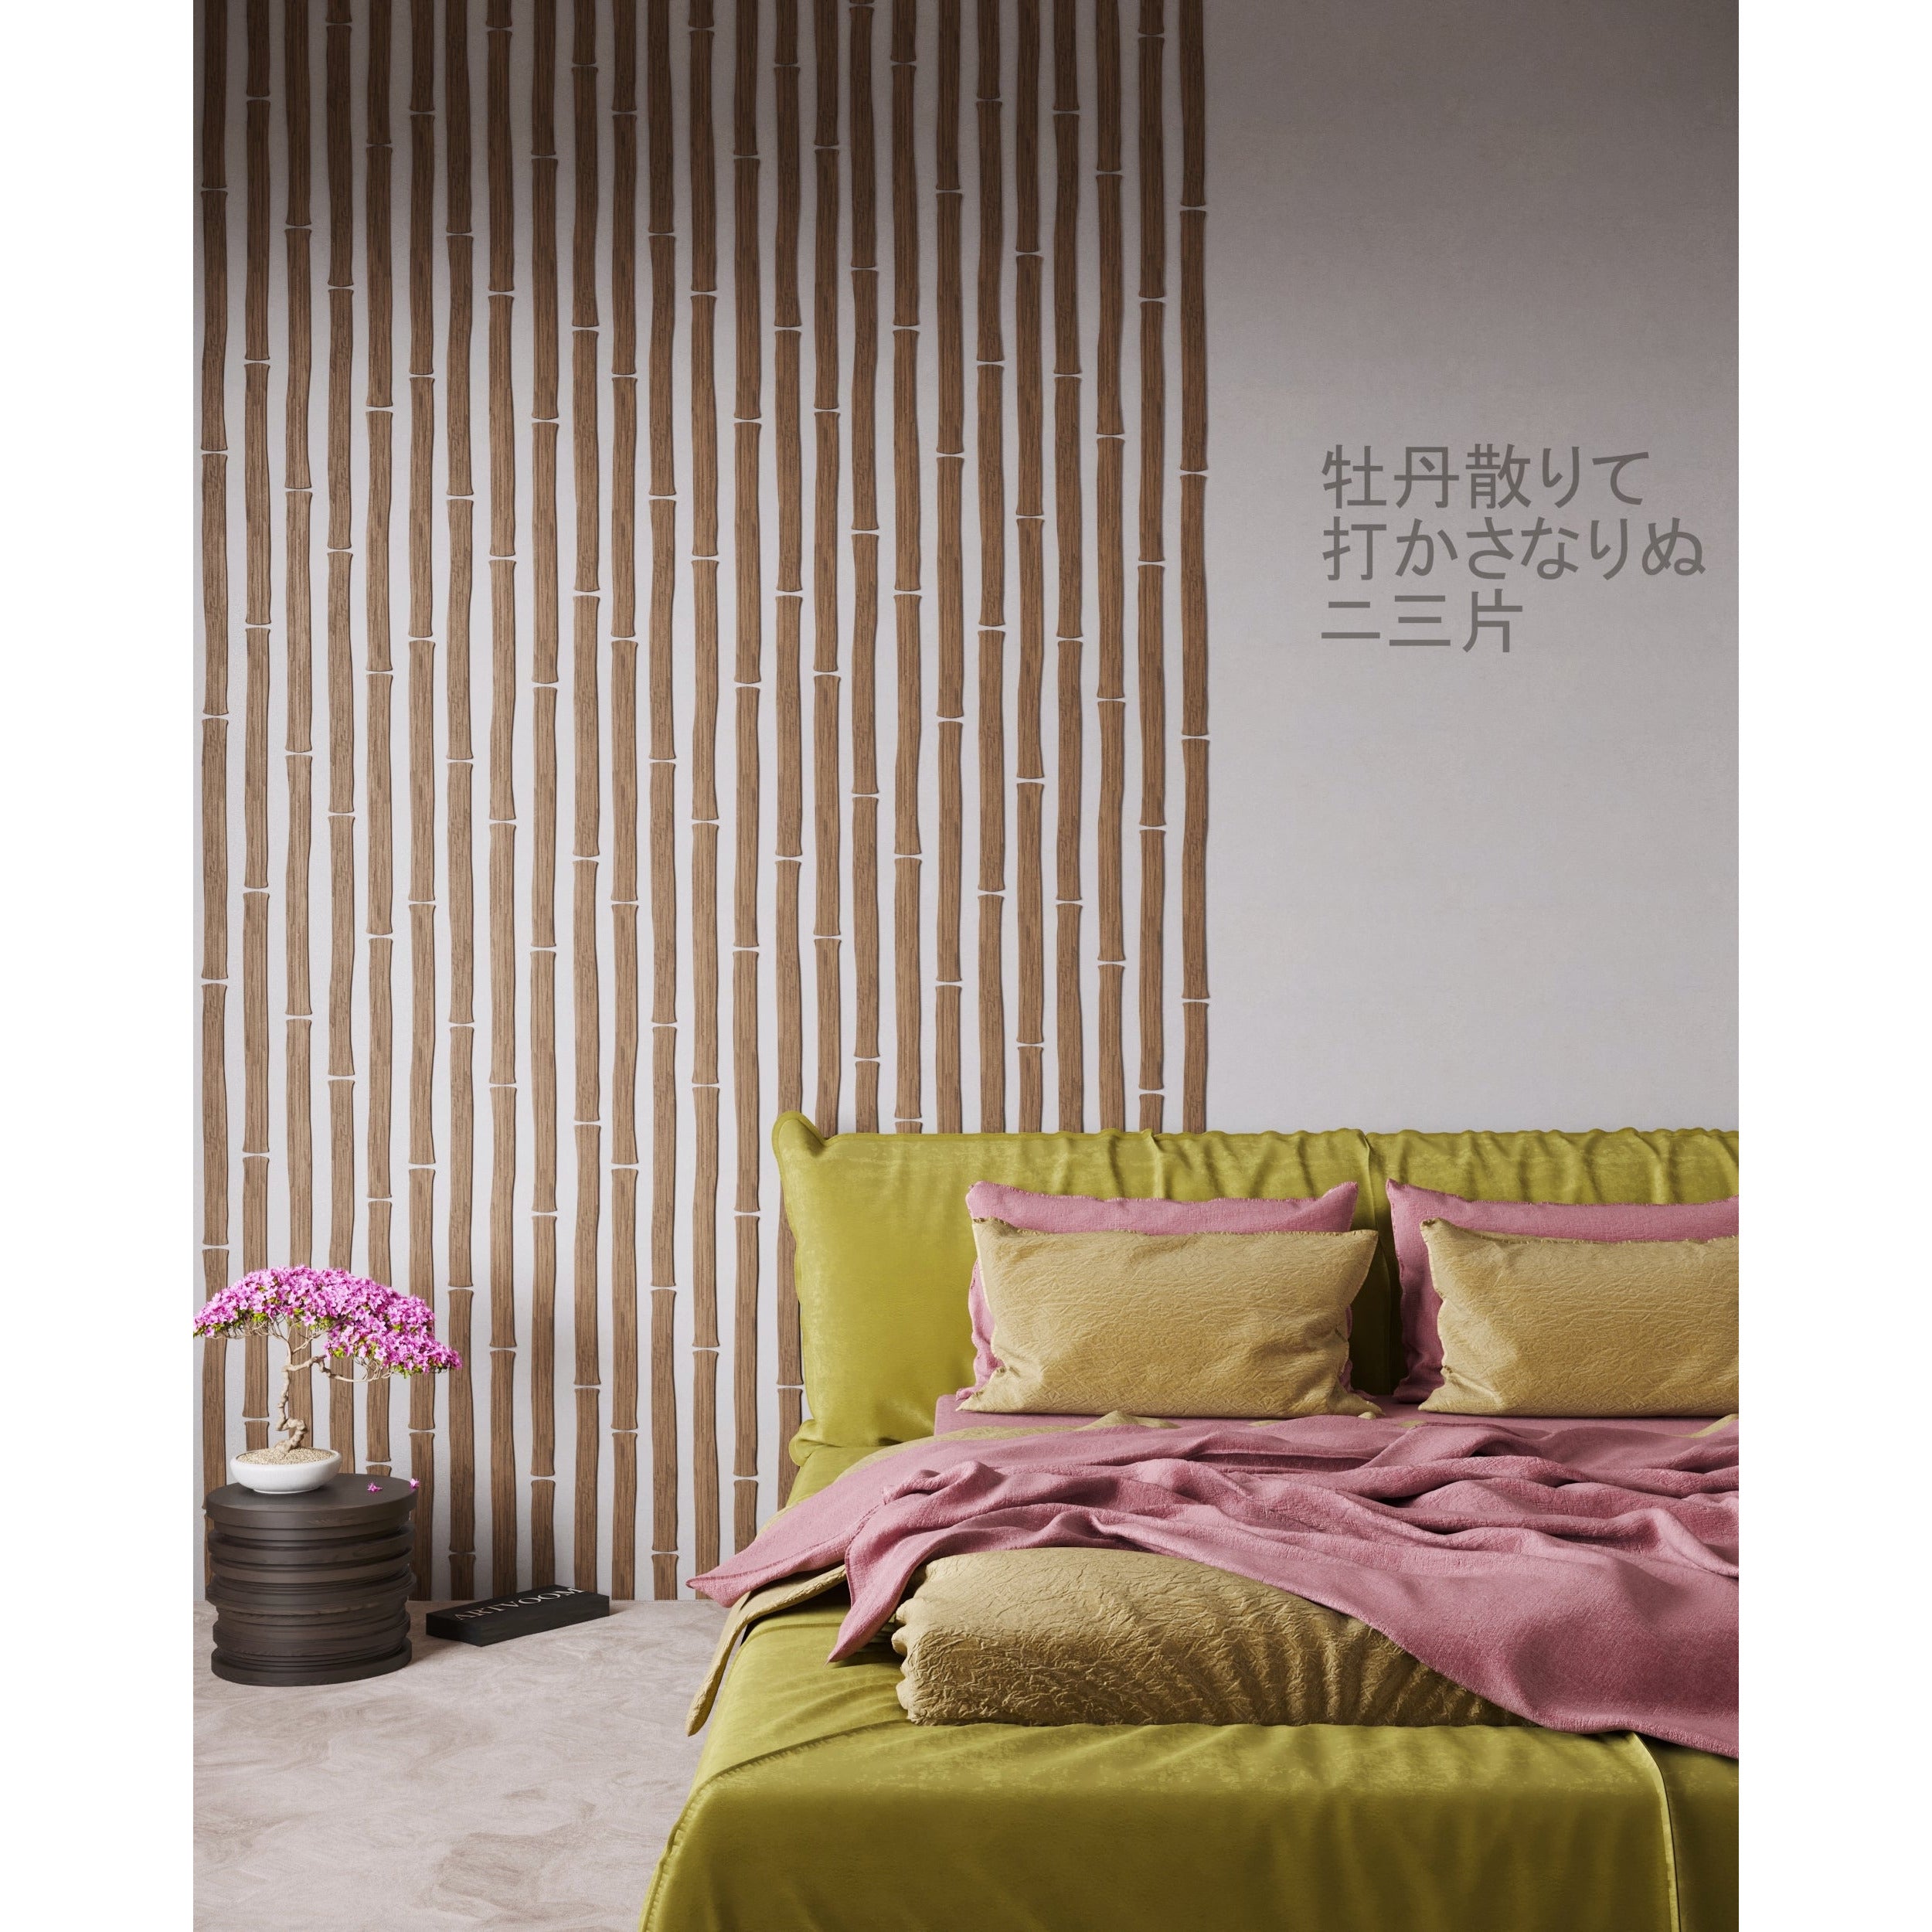 Rosewood Bamboo Panel Wall Slats, 24 pcs in box. Artvoom Wall Decor - Artvoom